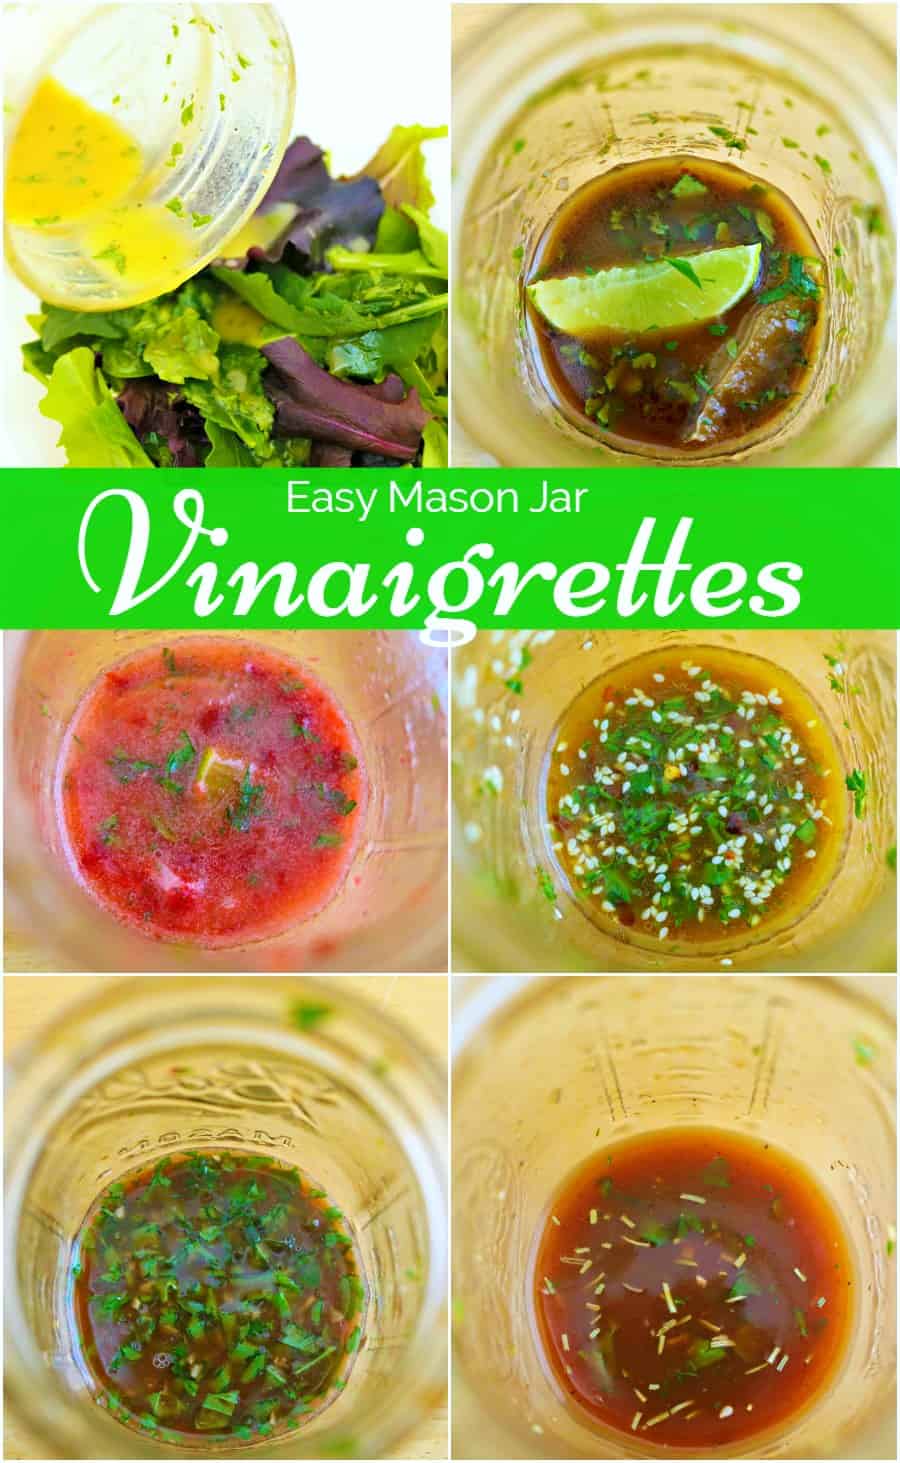 easy vinaigrette recipes made in mason jars